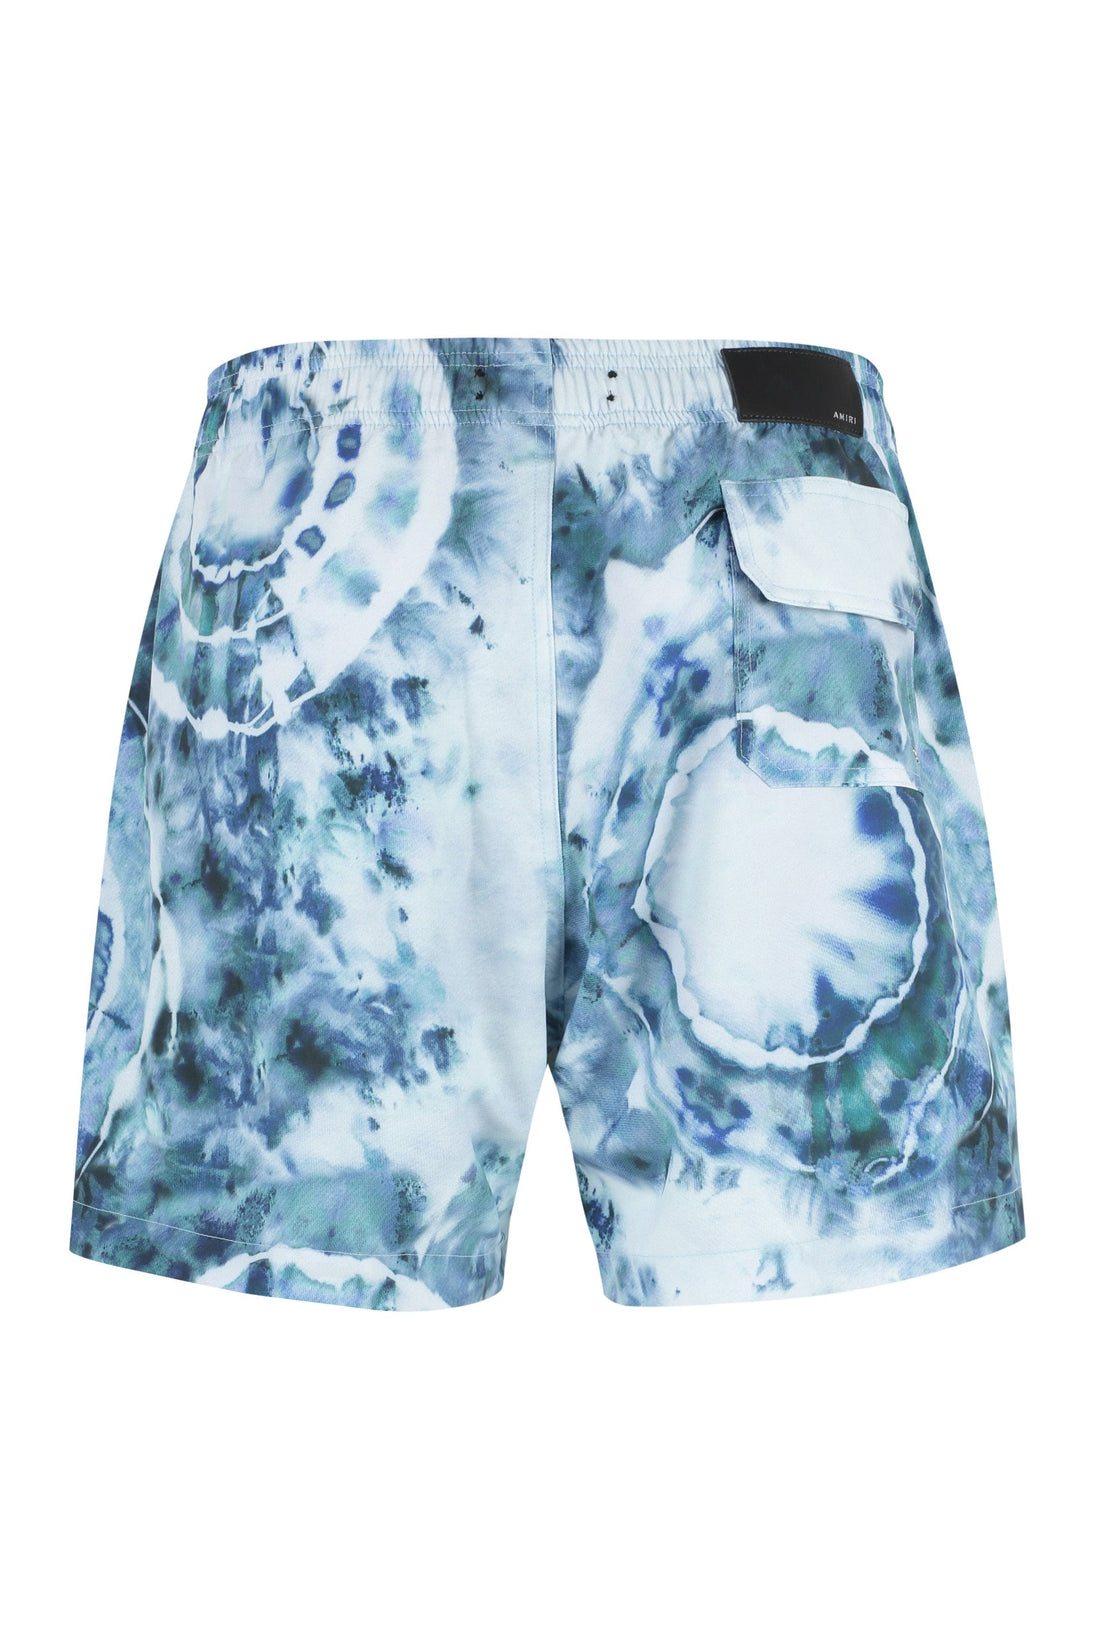 AMIRI-OUTLET-SALE-Printed swim shorts-ARCHIVIST